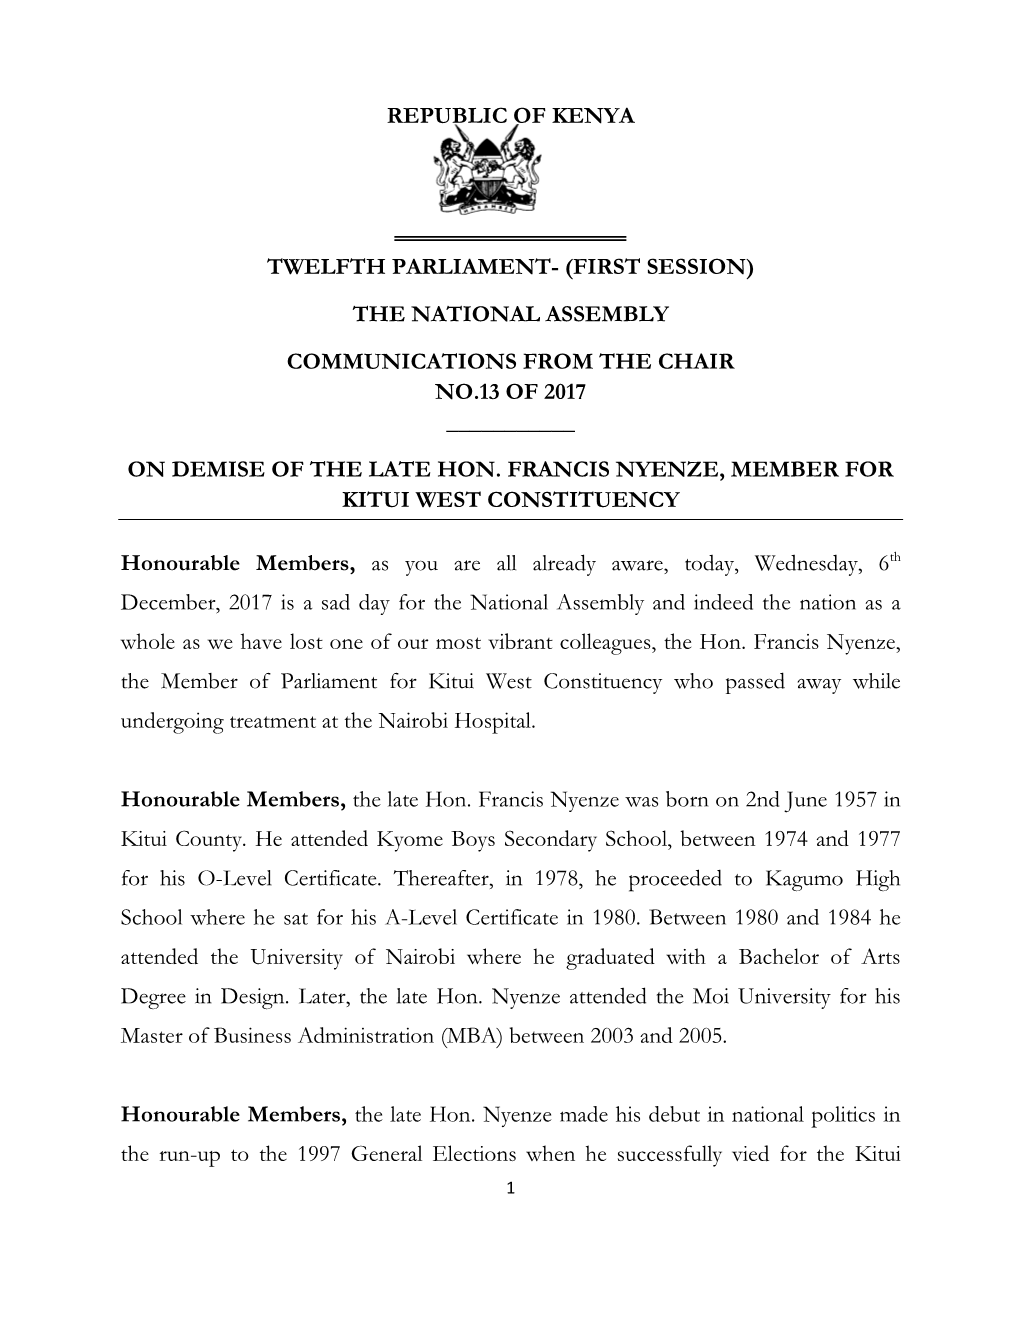 Republic of Kenya Twelfth Parliament- (First Session